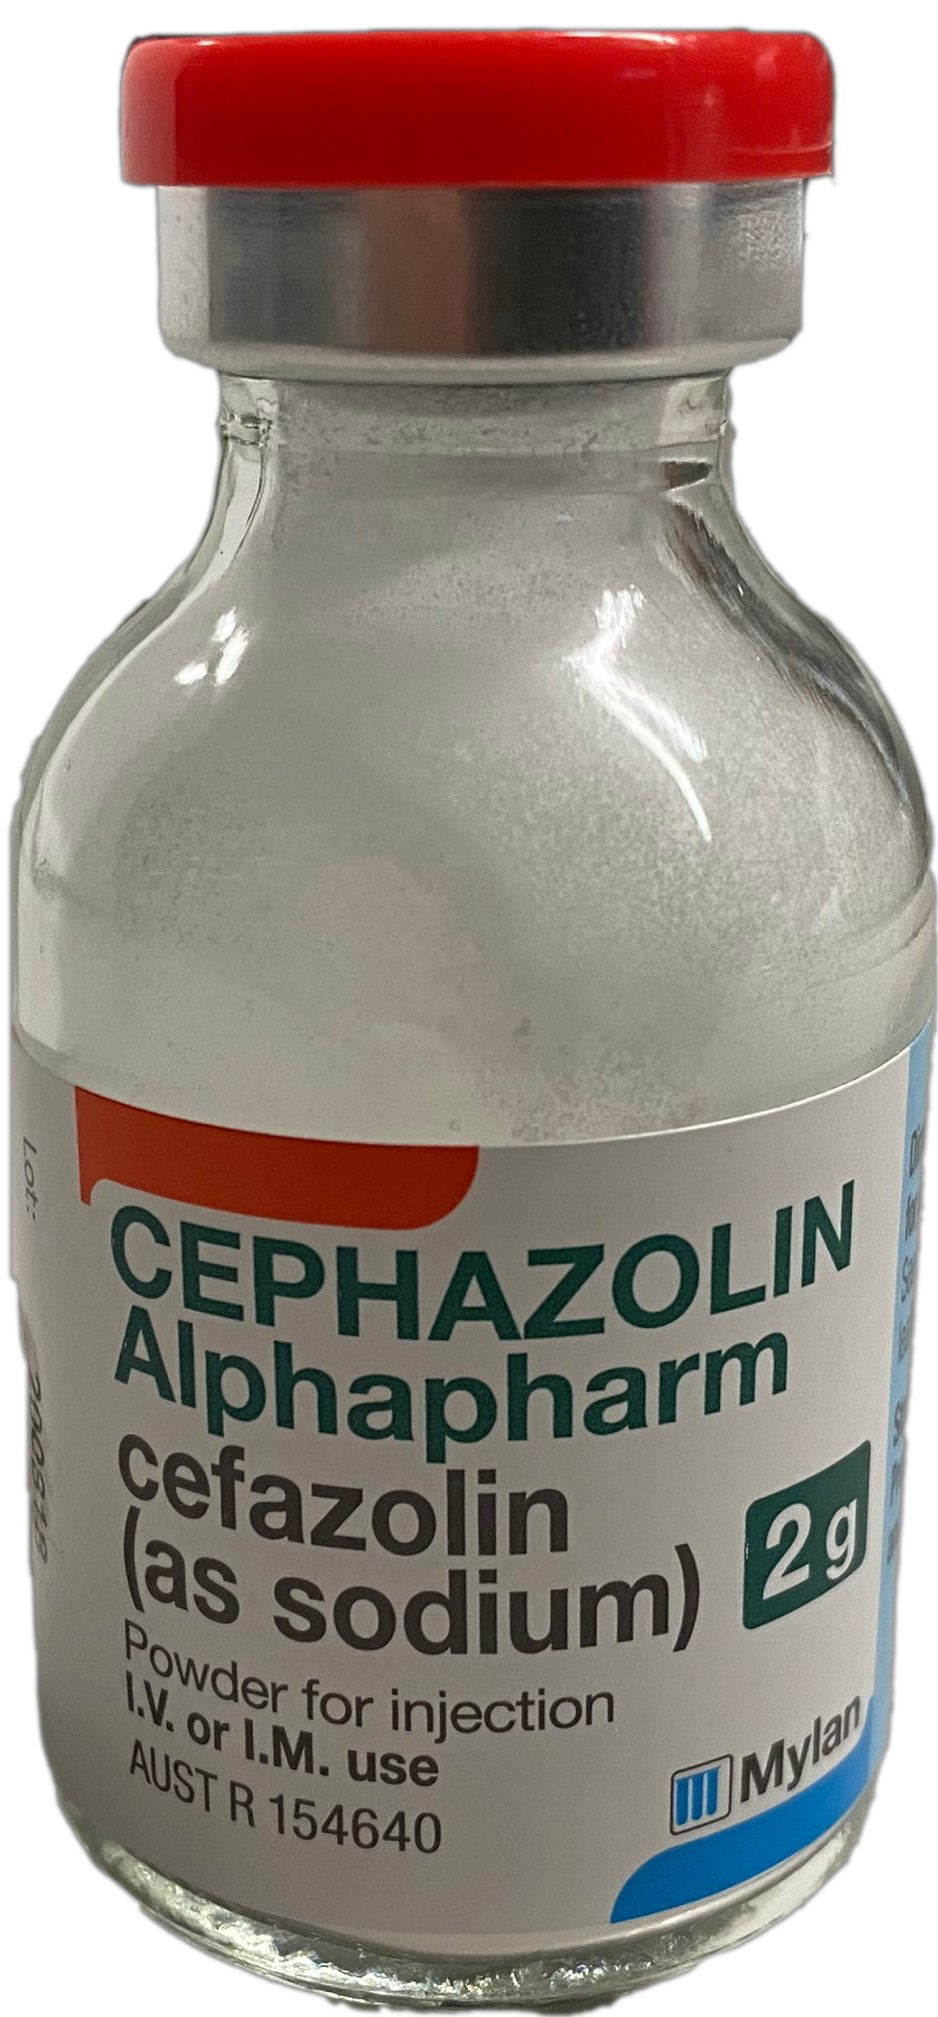 Cephazolin 2g